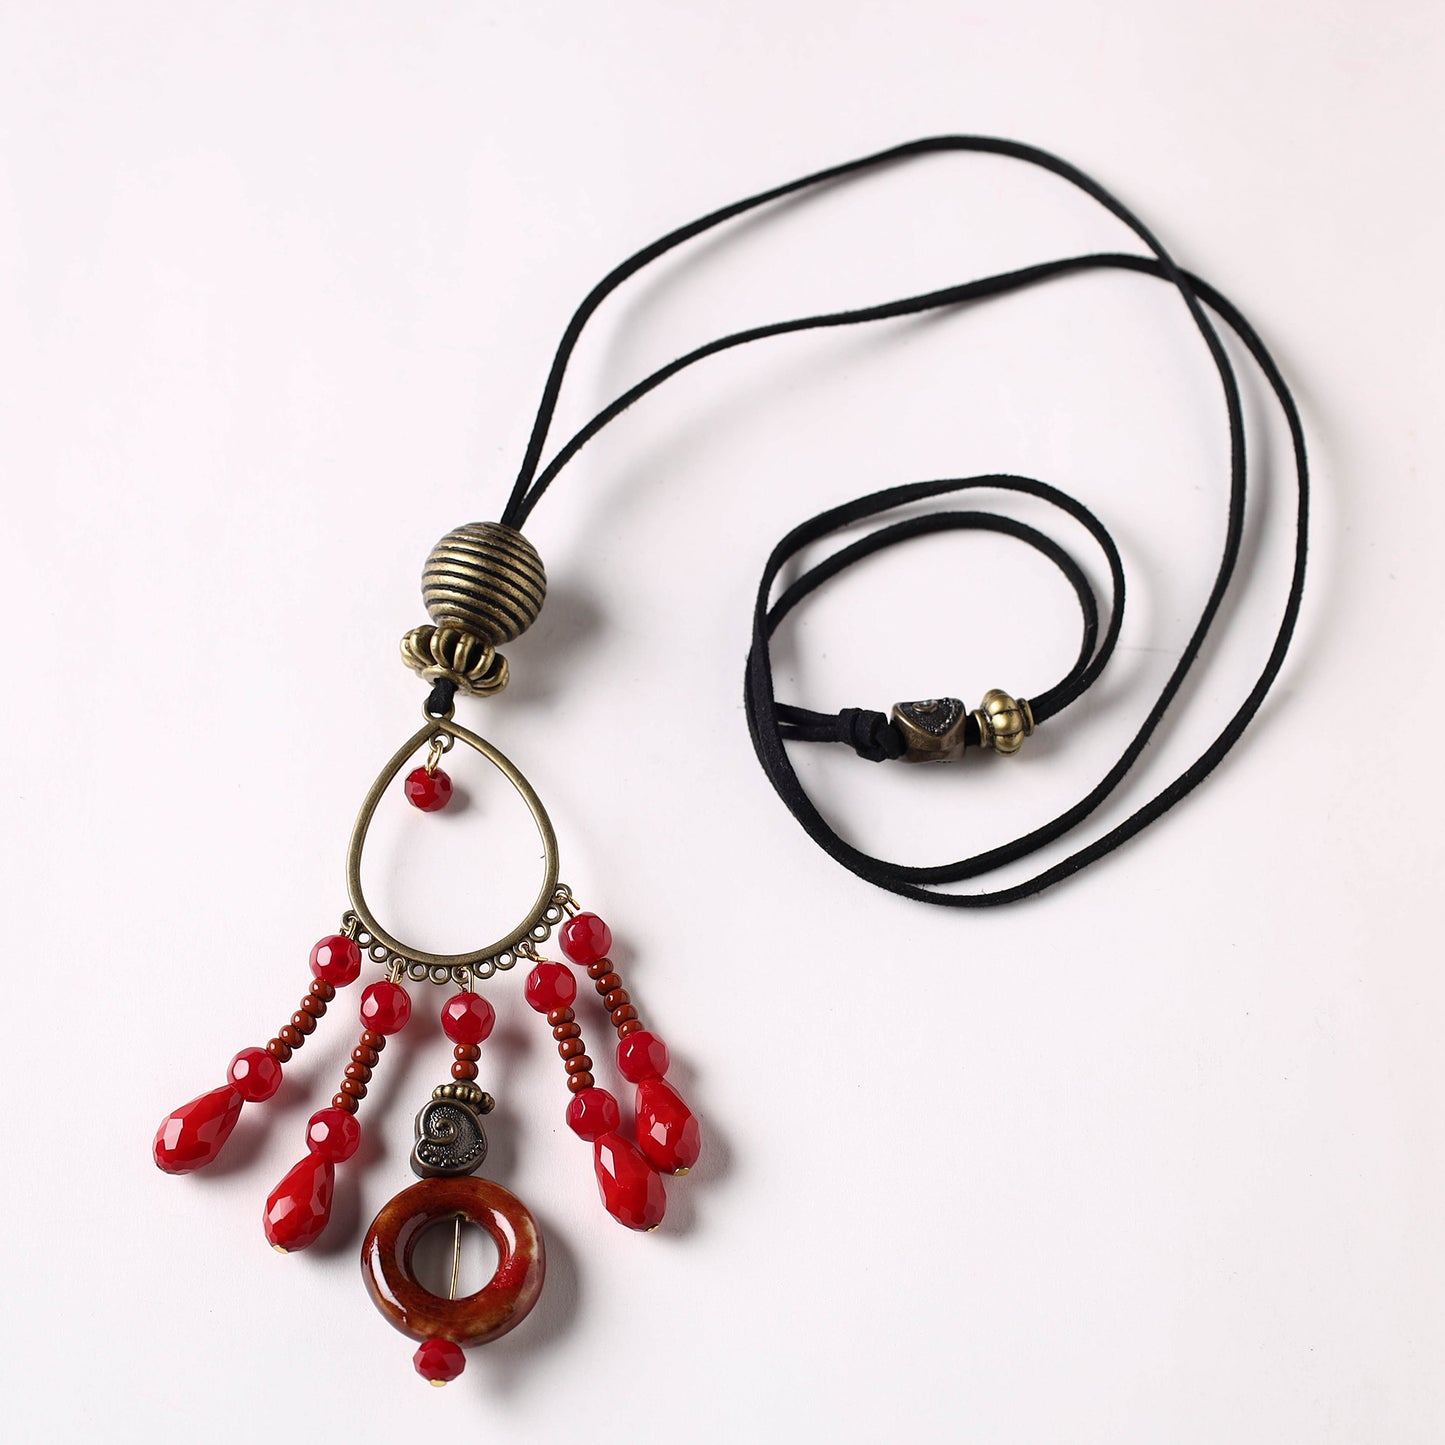 Handmade Pendant Rope Necklace 38